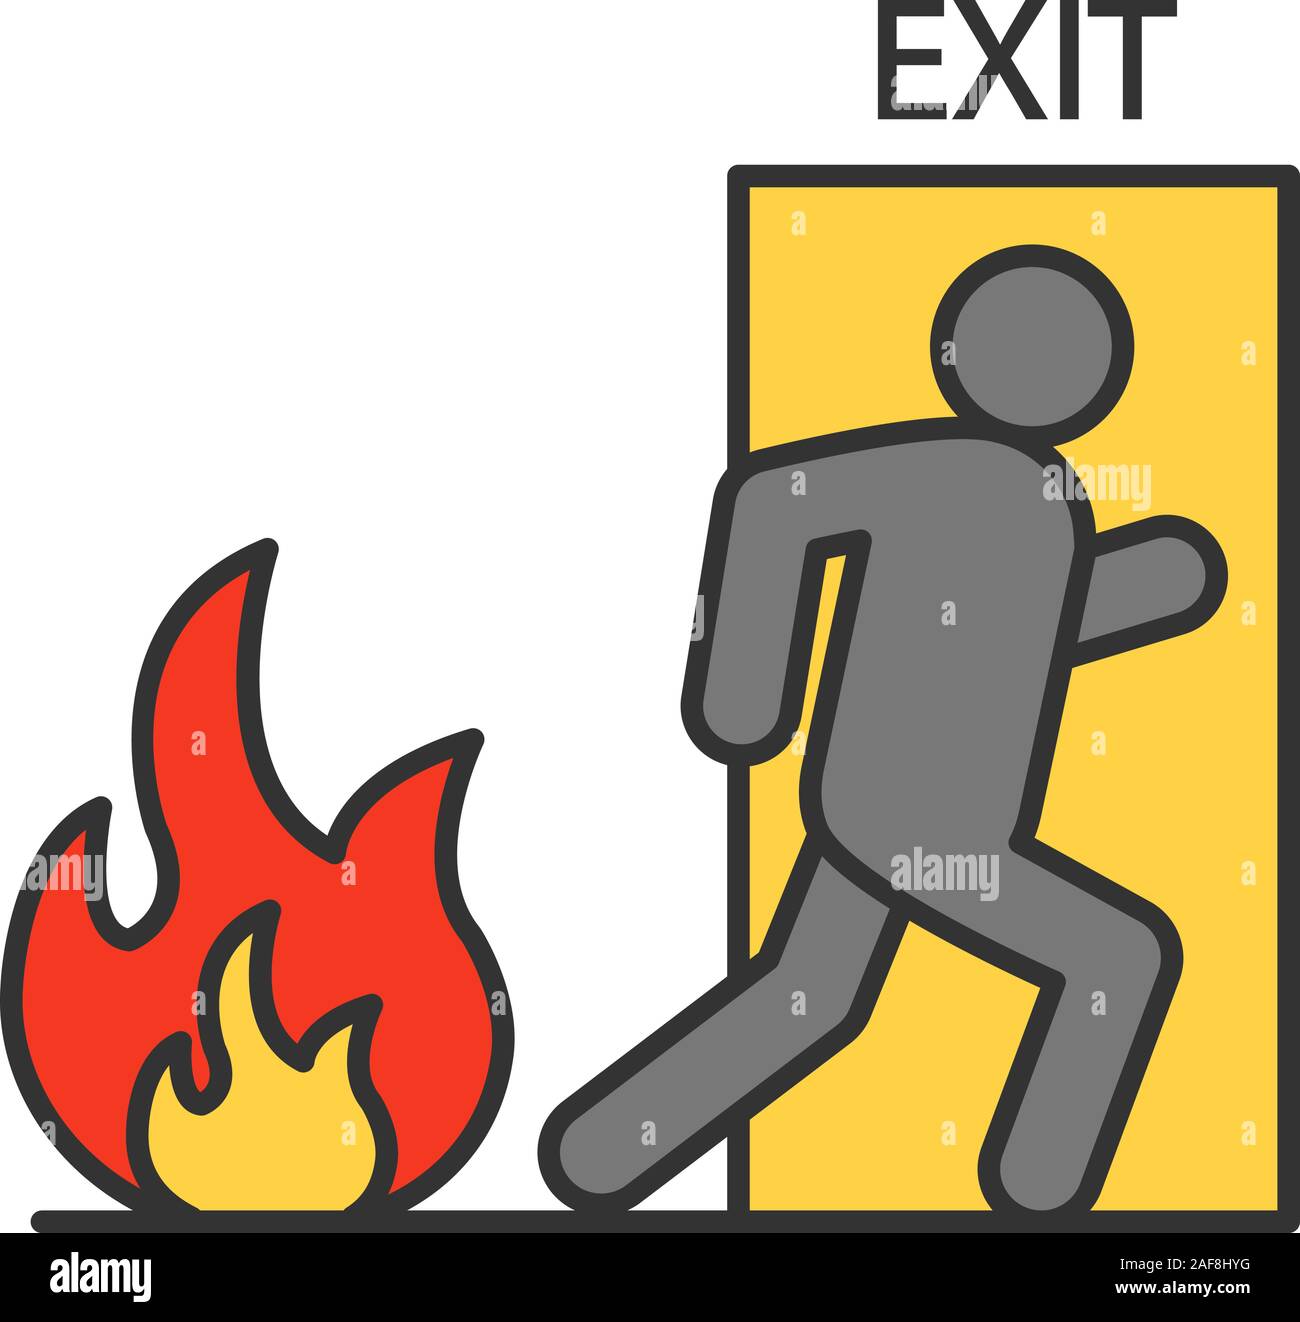 Fire Evacuation Plan Cartoon